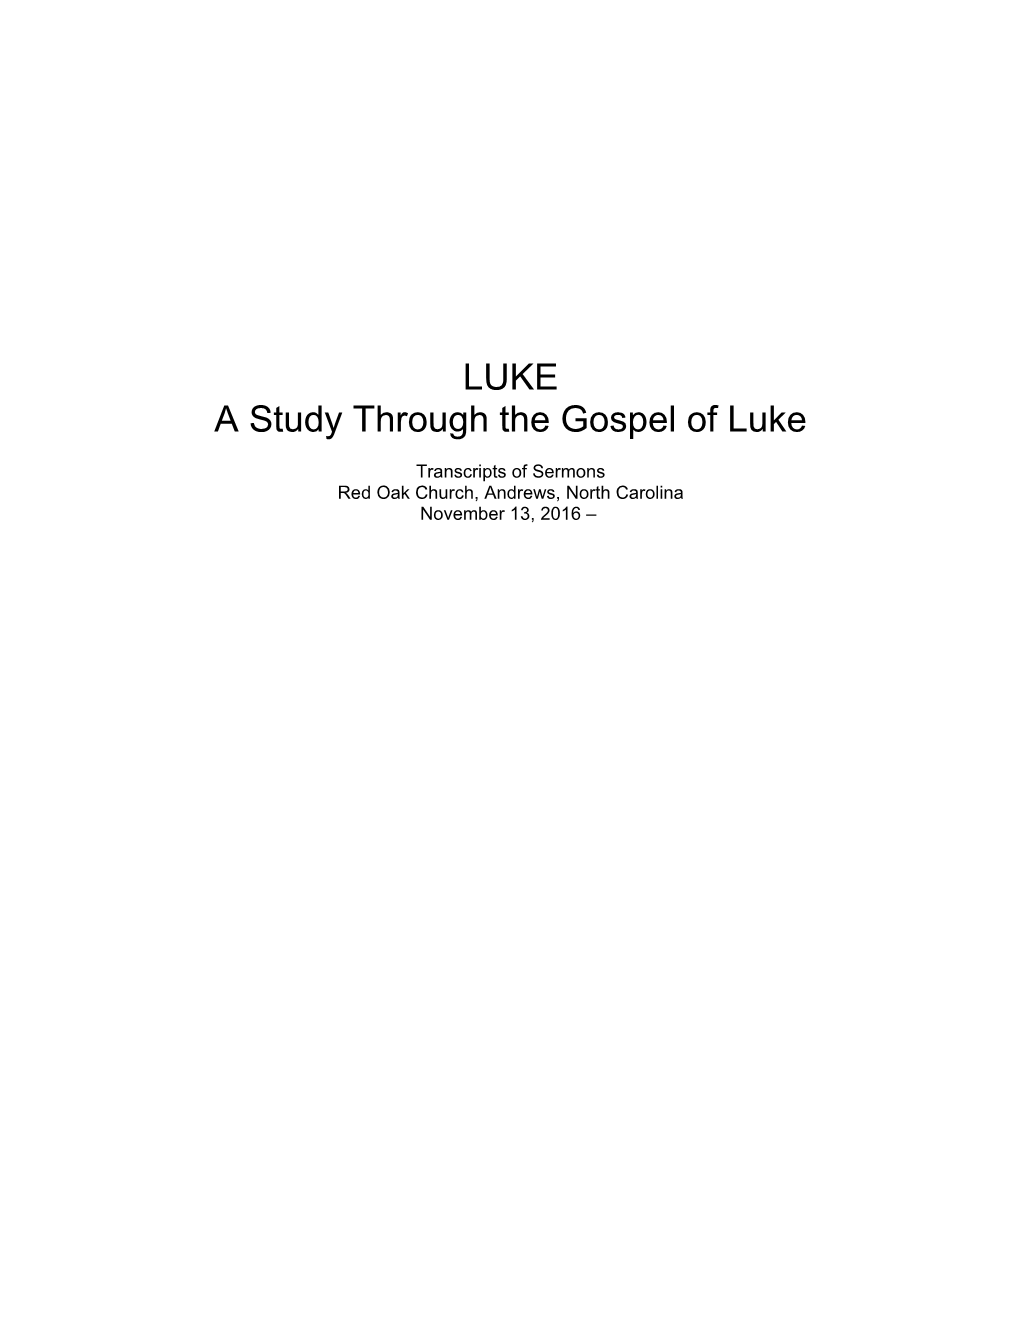 A Study Through the Gospel of Luke